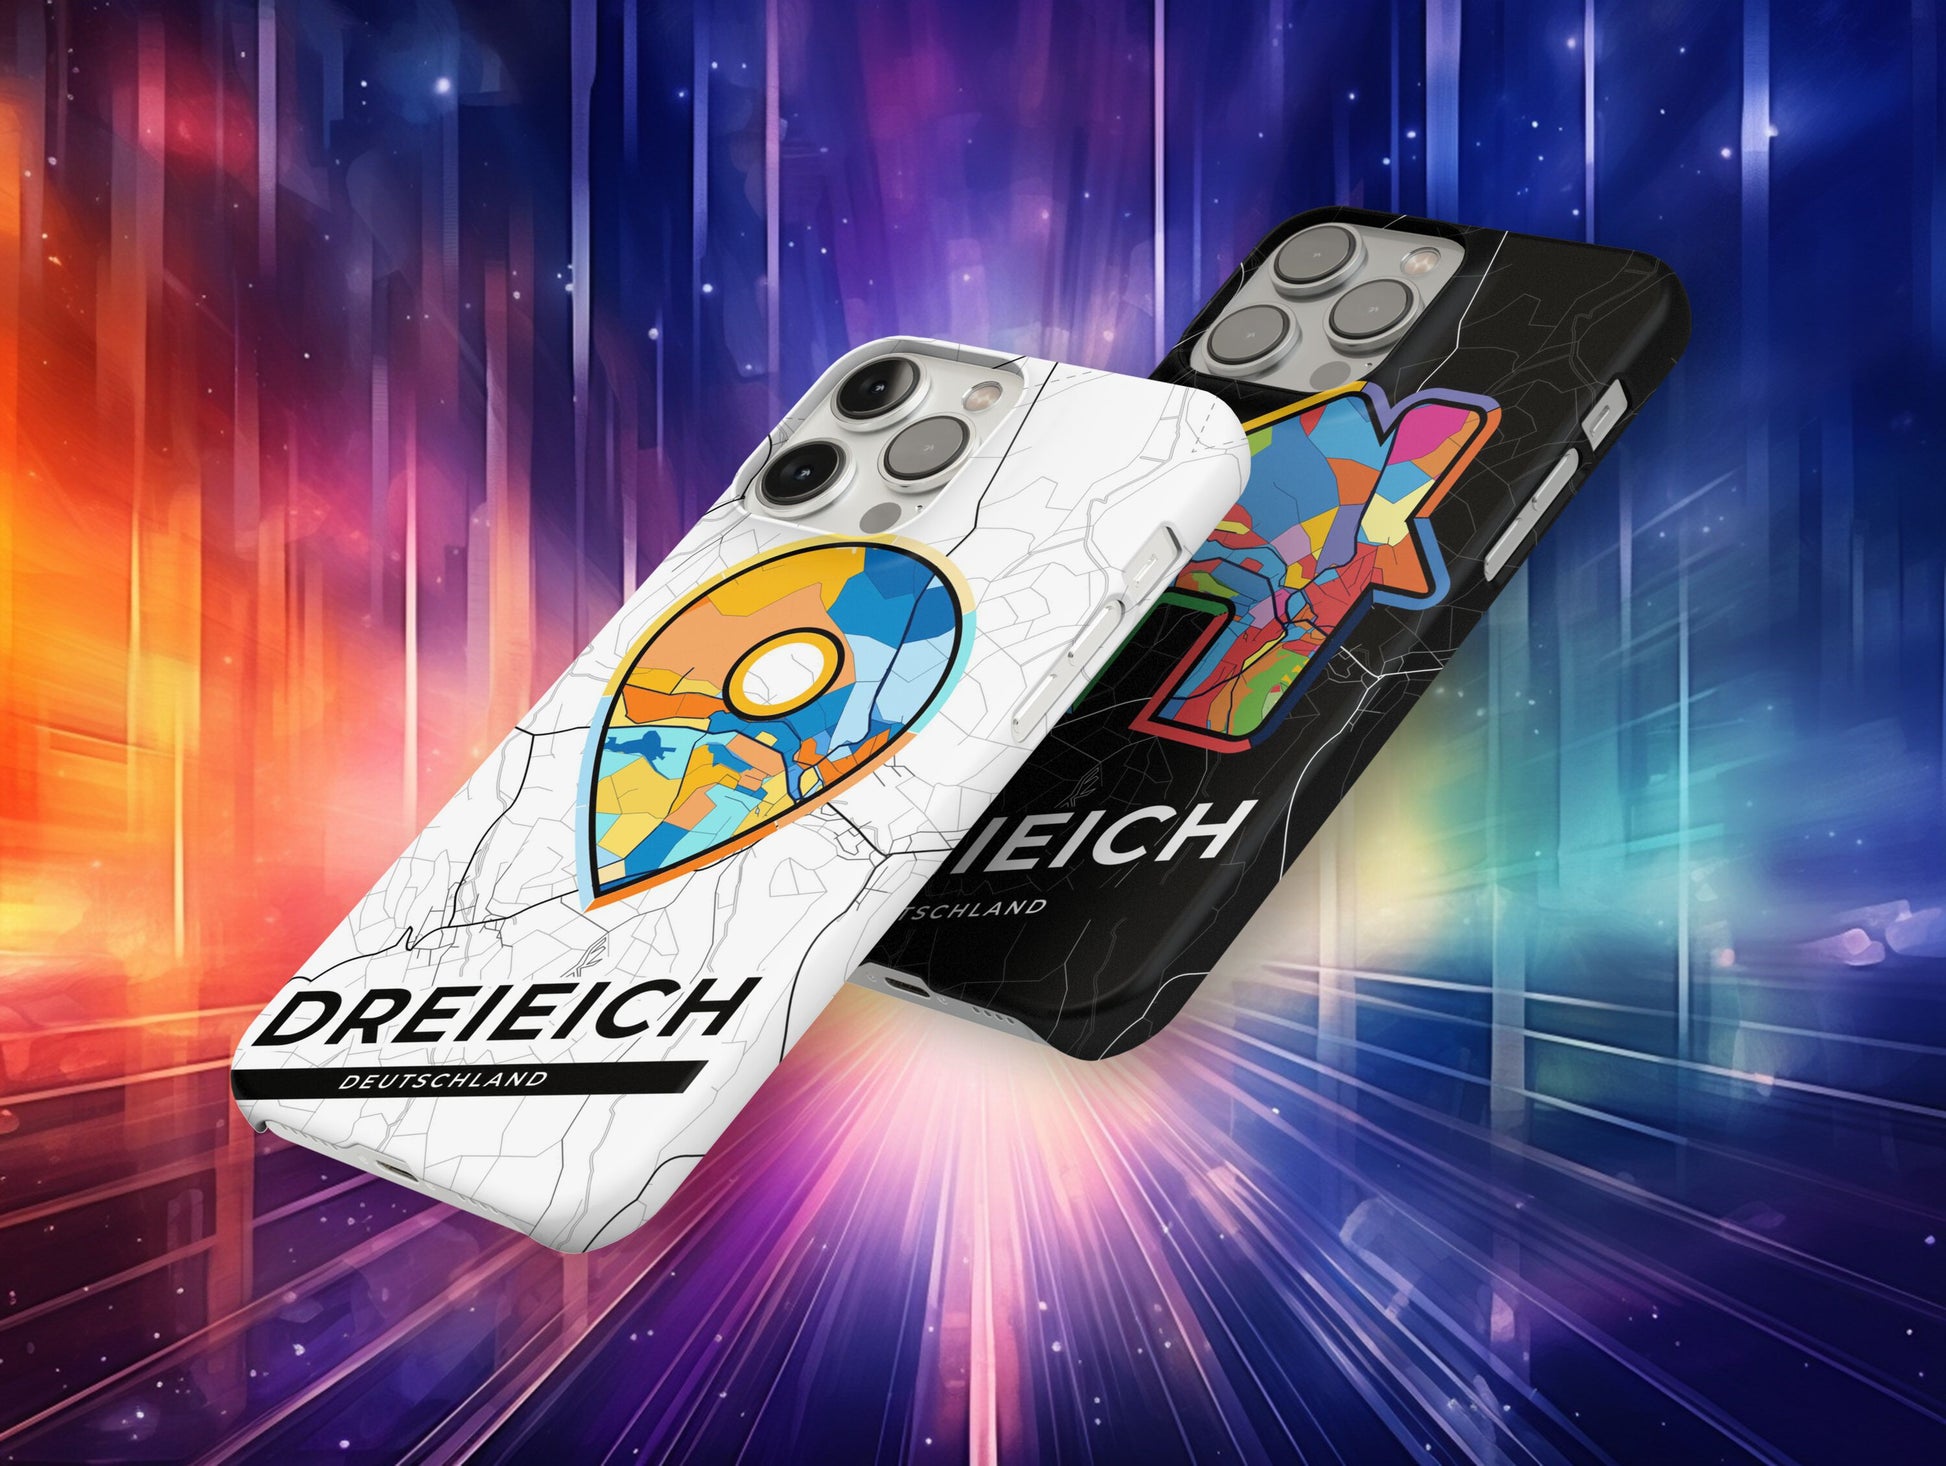 Dreieich Deutschland slim phone case with colorful icon. Birthday, wedding or housewarming gift. Couple match cases.